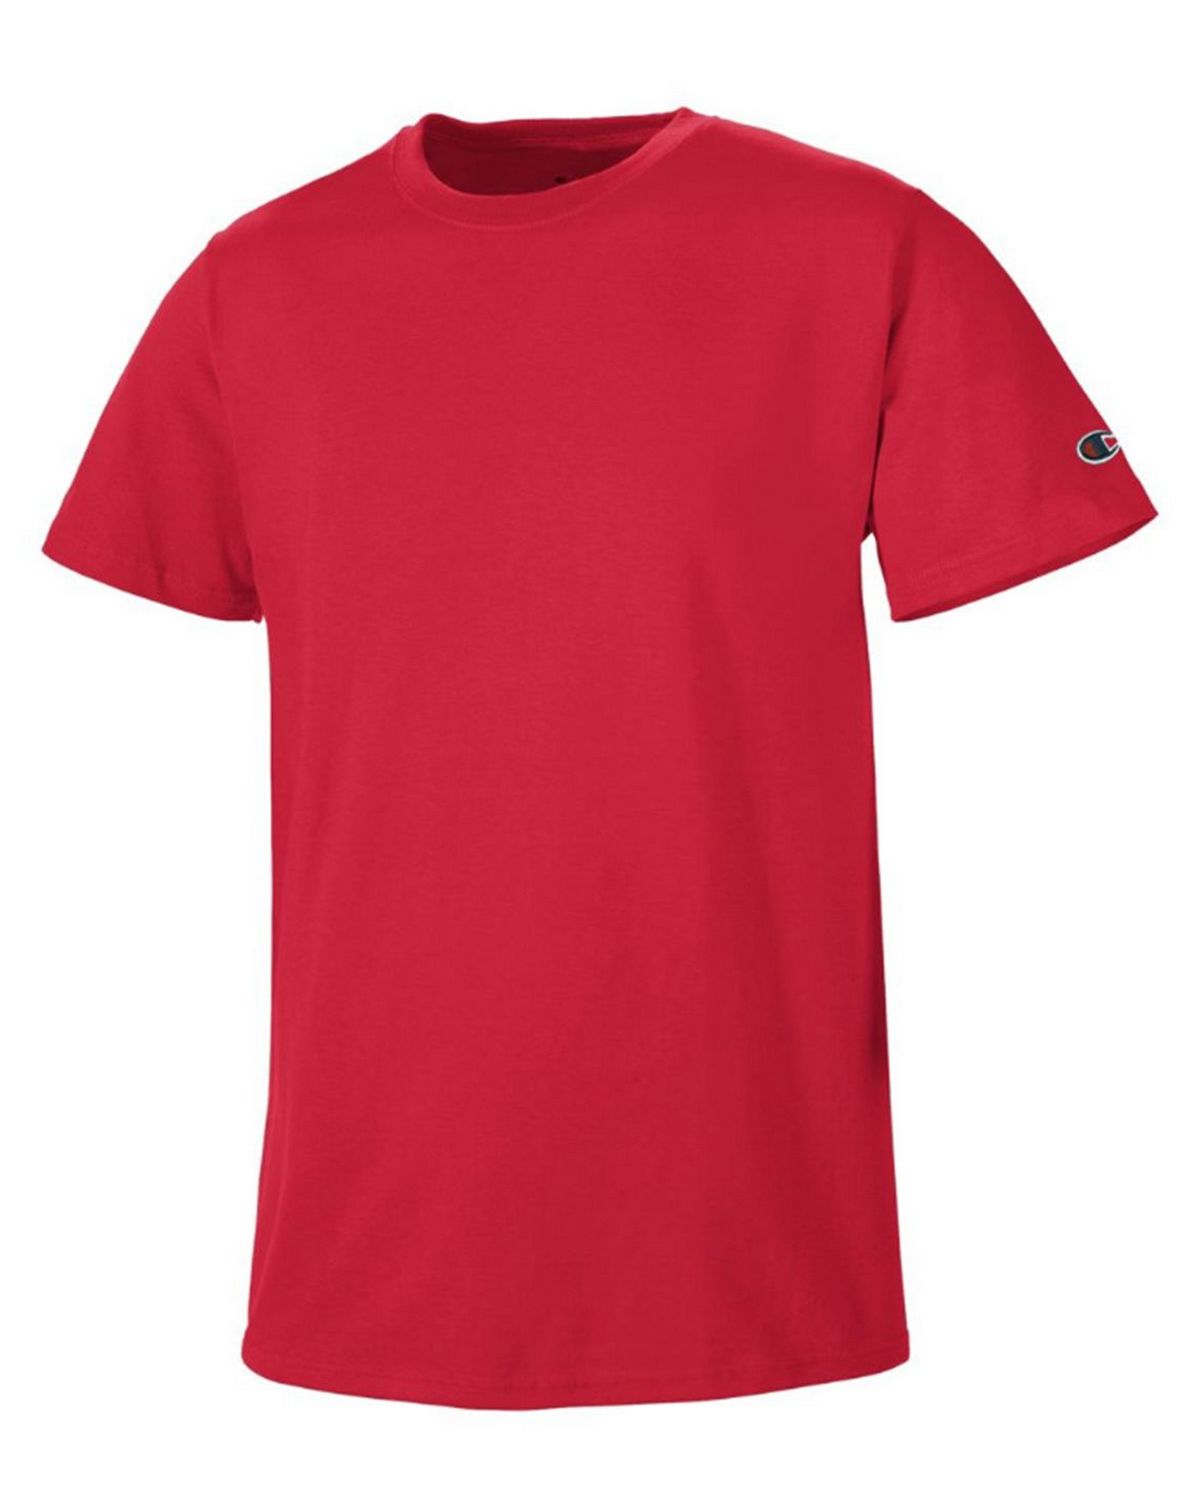 uit Plantage inval Champion T425 Tagless Short Sleeve T-Shirt - Men's